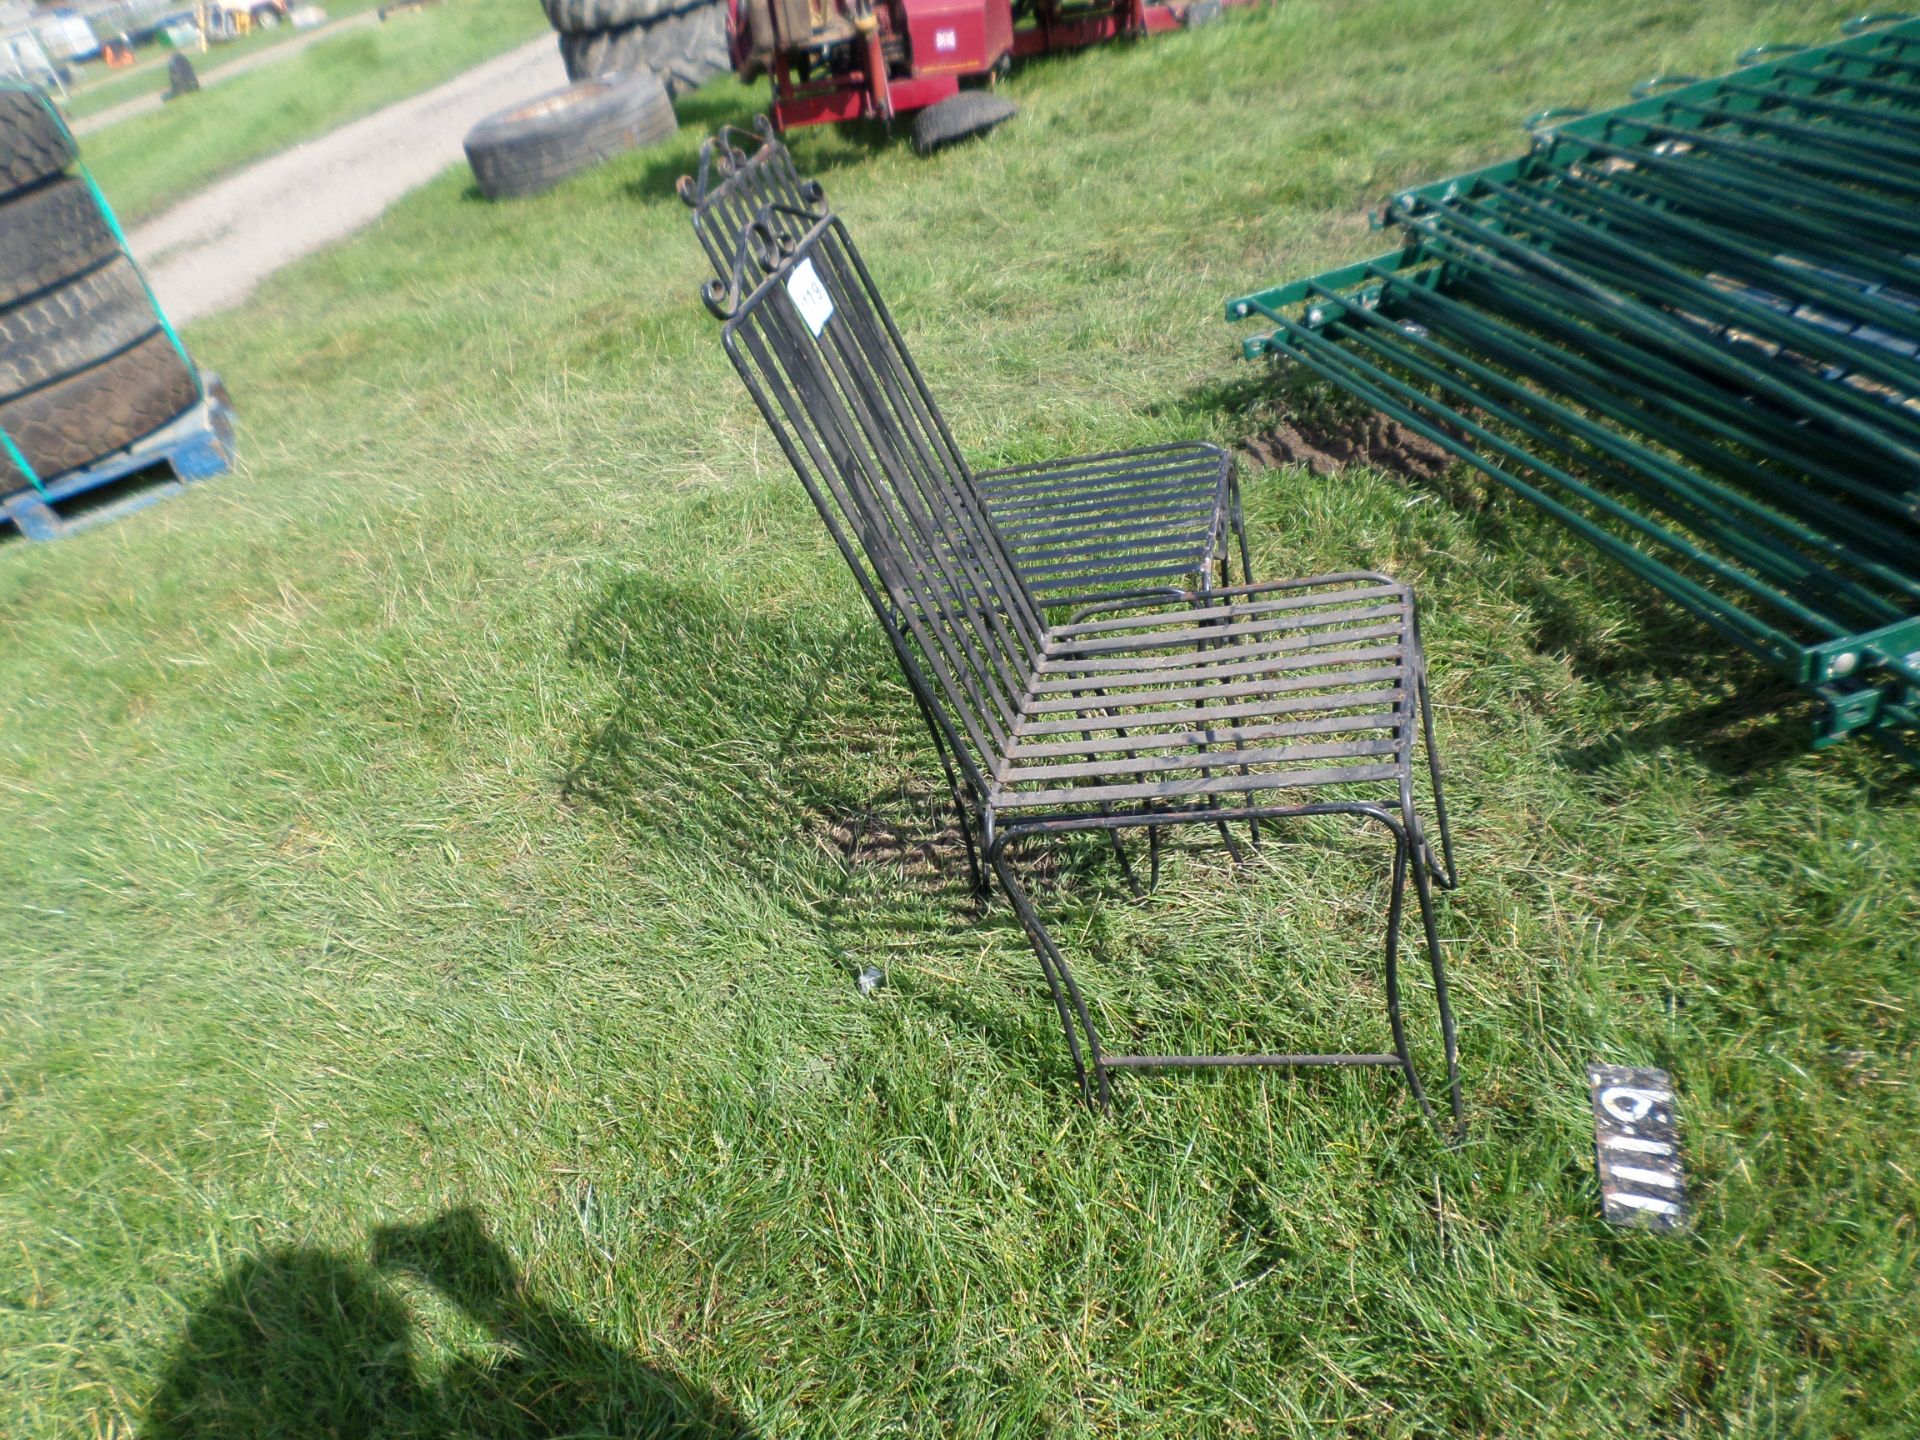 2 metal garden chairs - Image 2 of 2